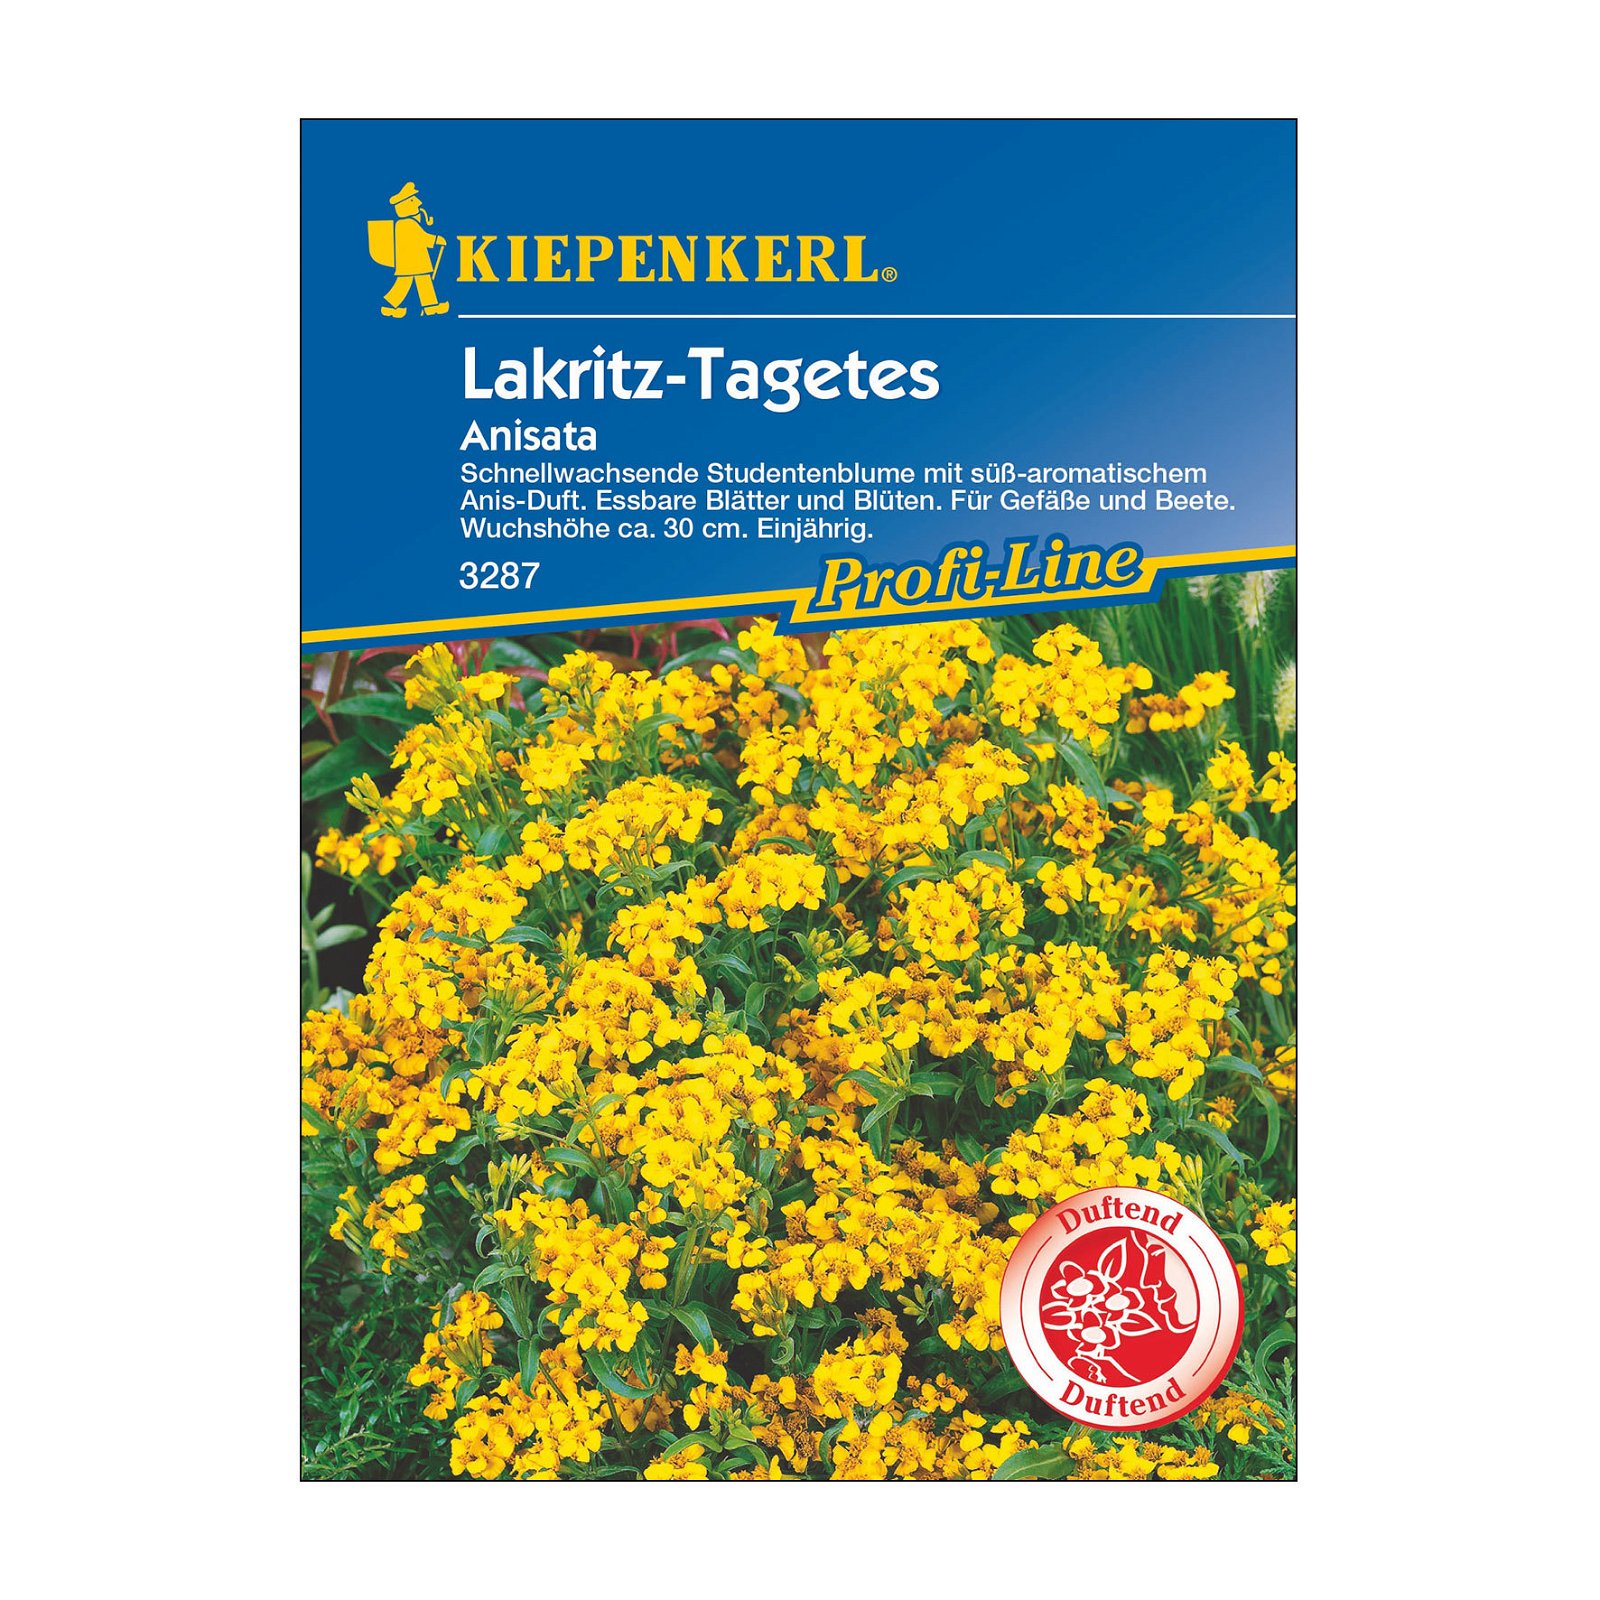 Blumensamen, Lakritz-Tagetes 'Anisata'